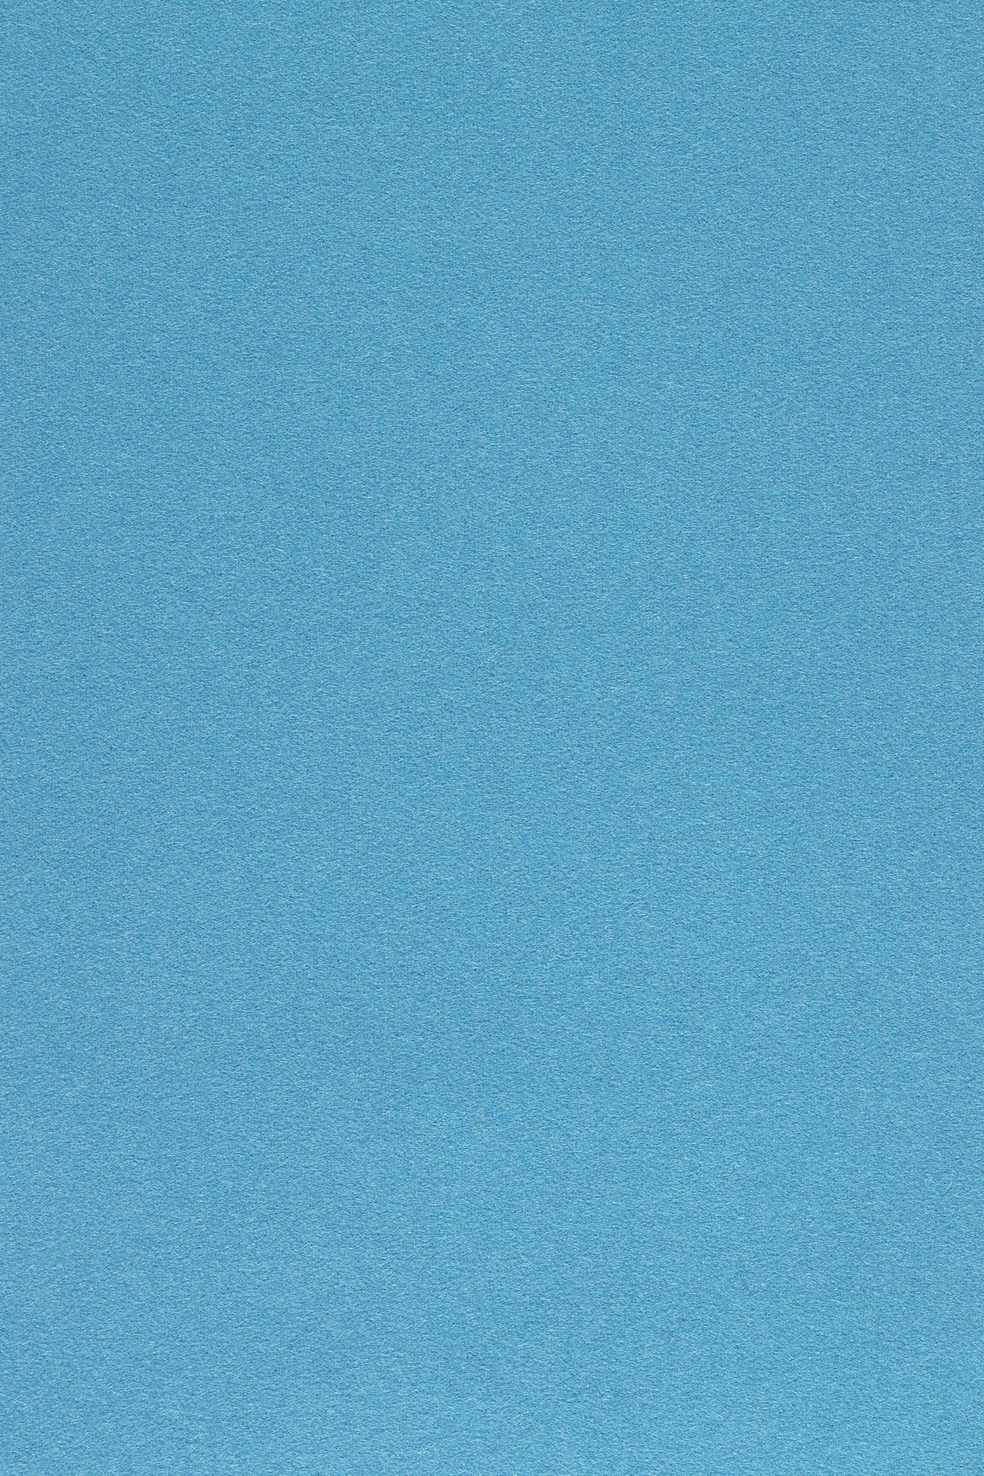 Fabric sample Divina 3 826 blue